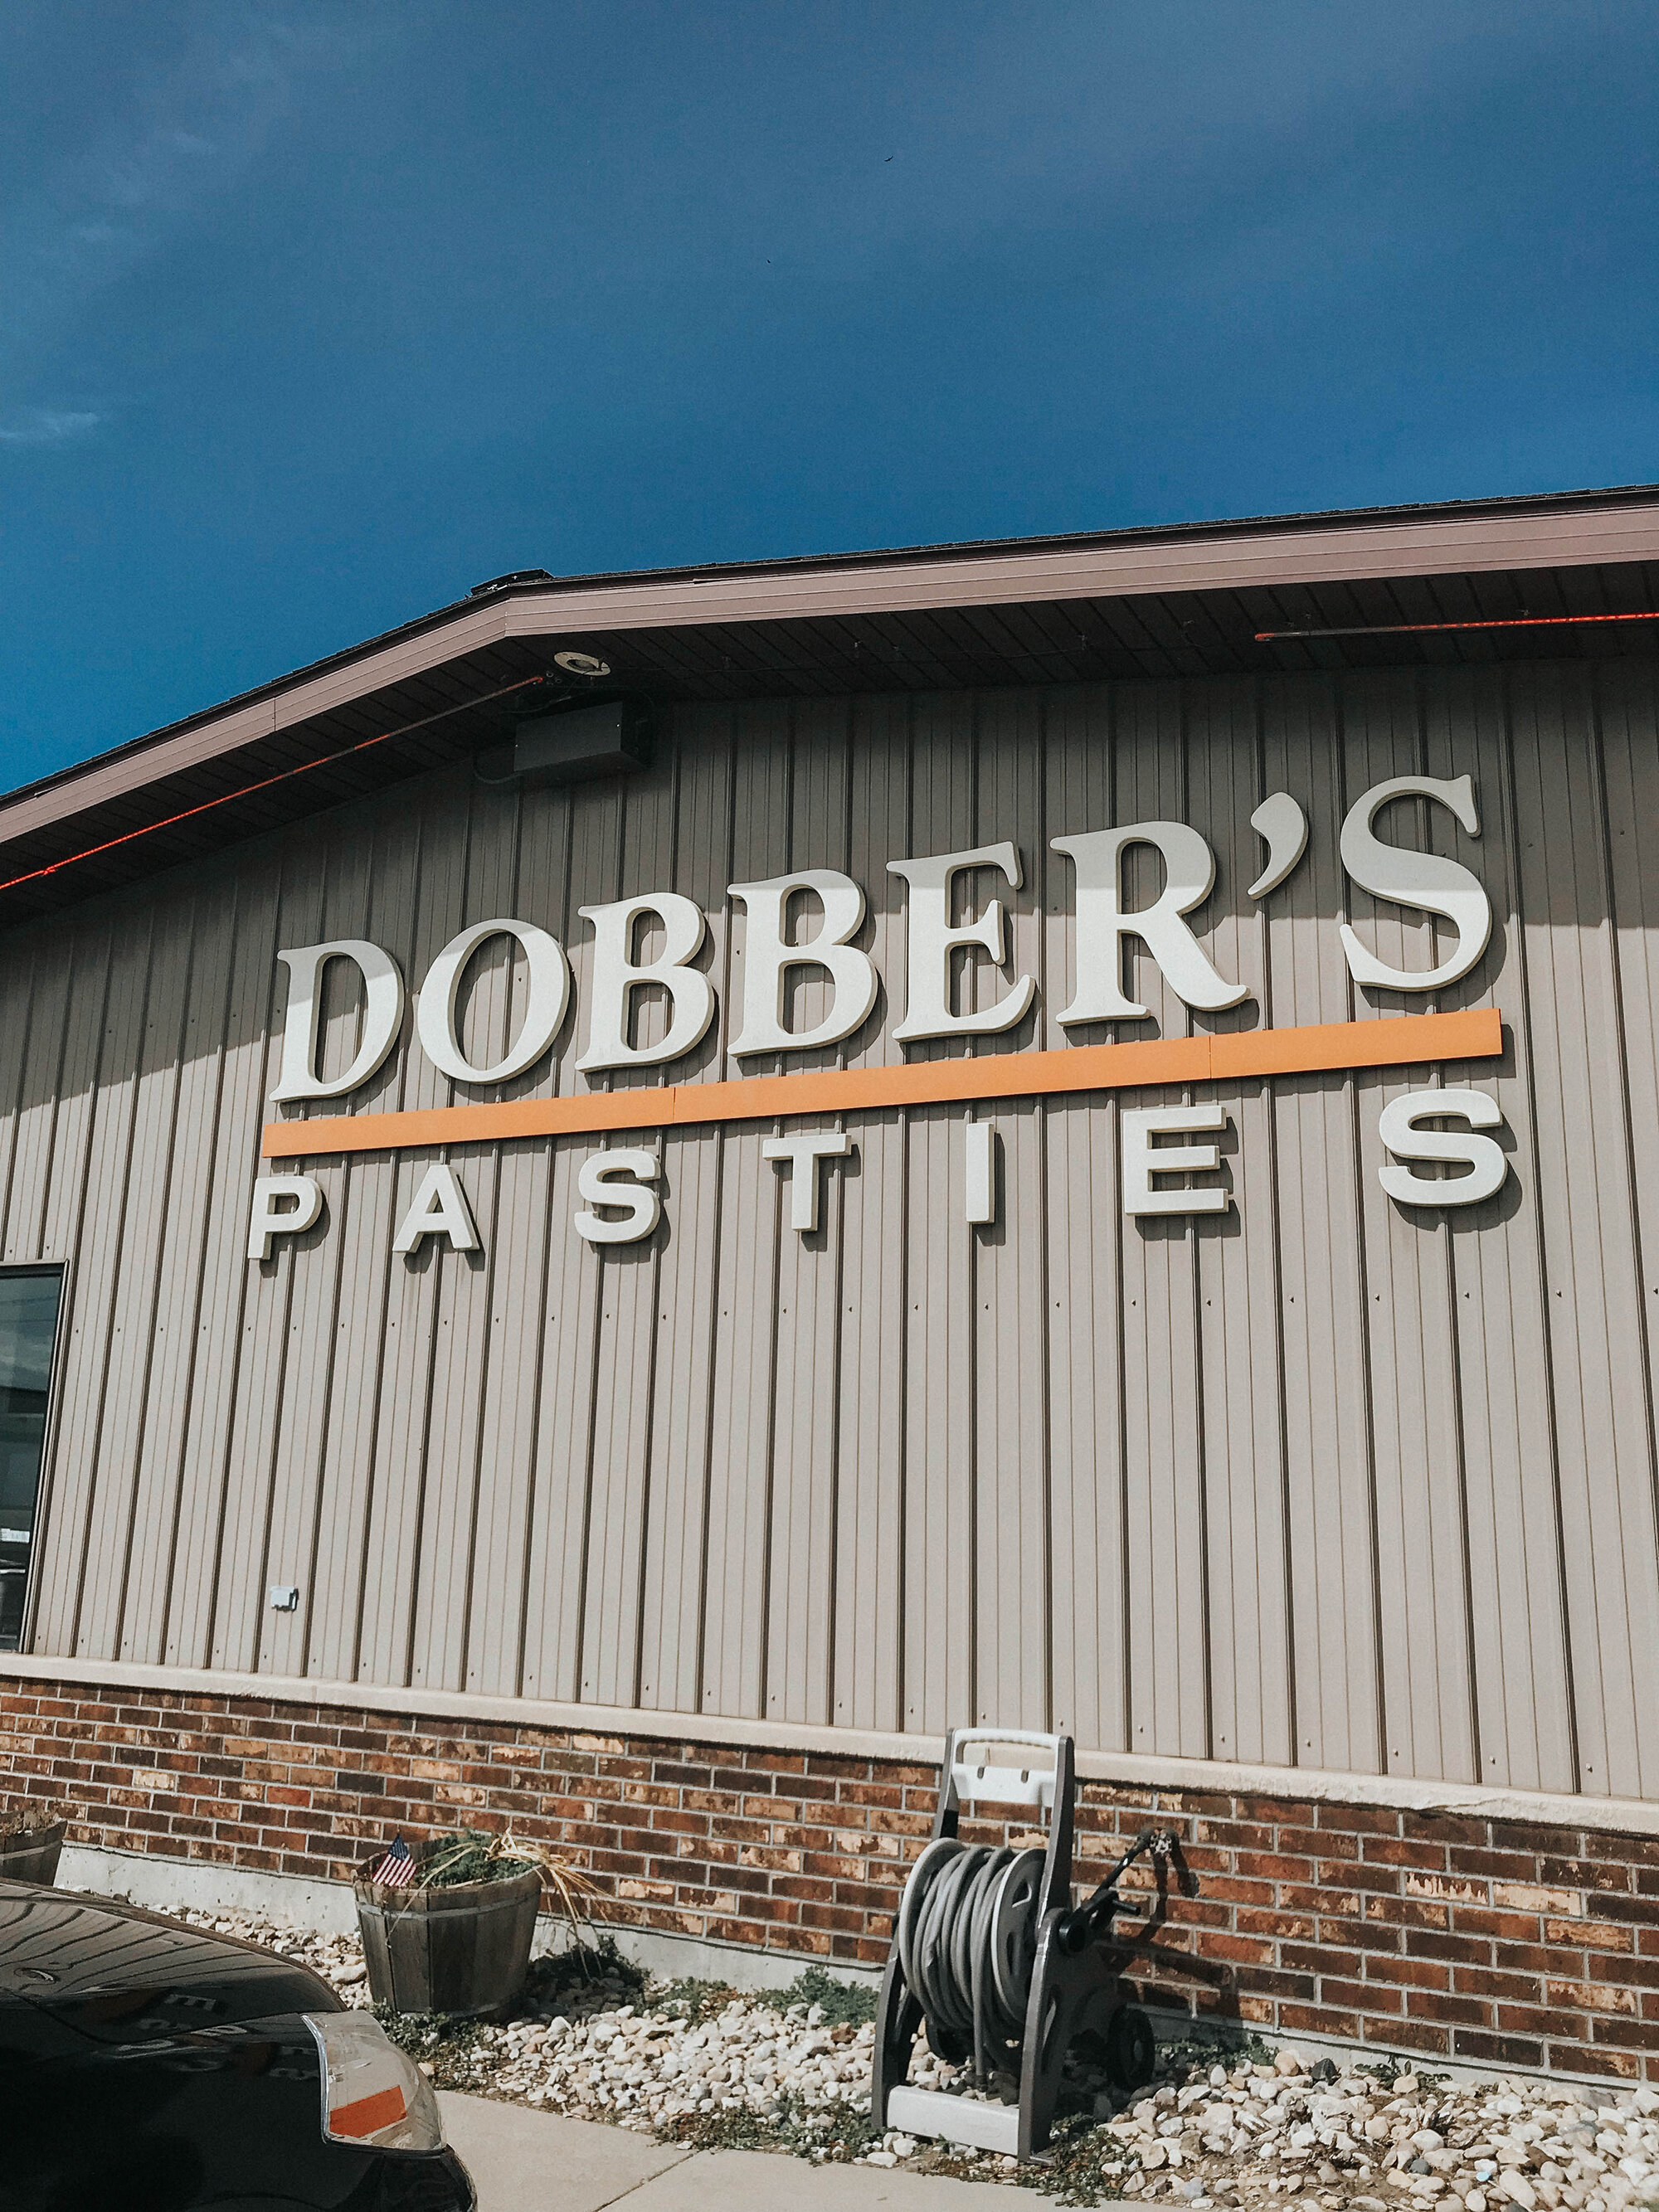 Dobber's Pasties